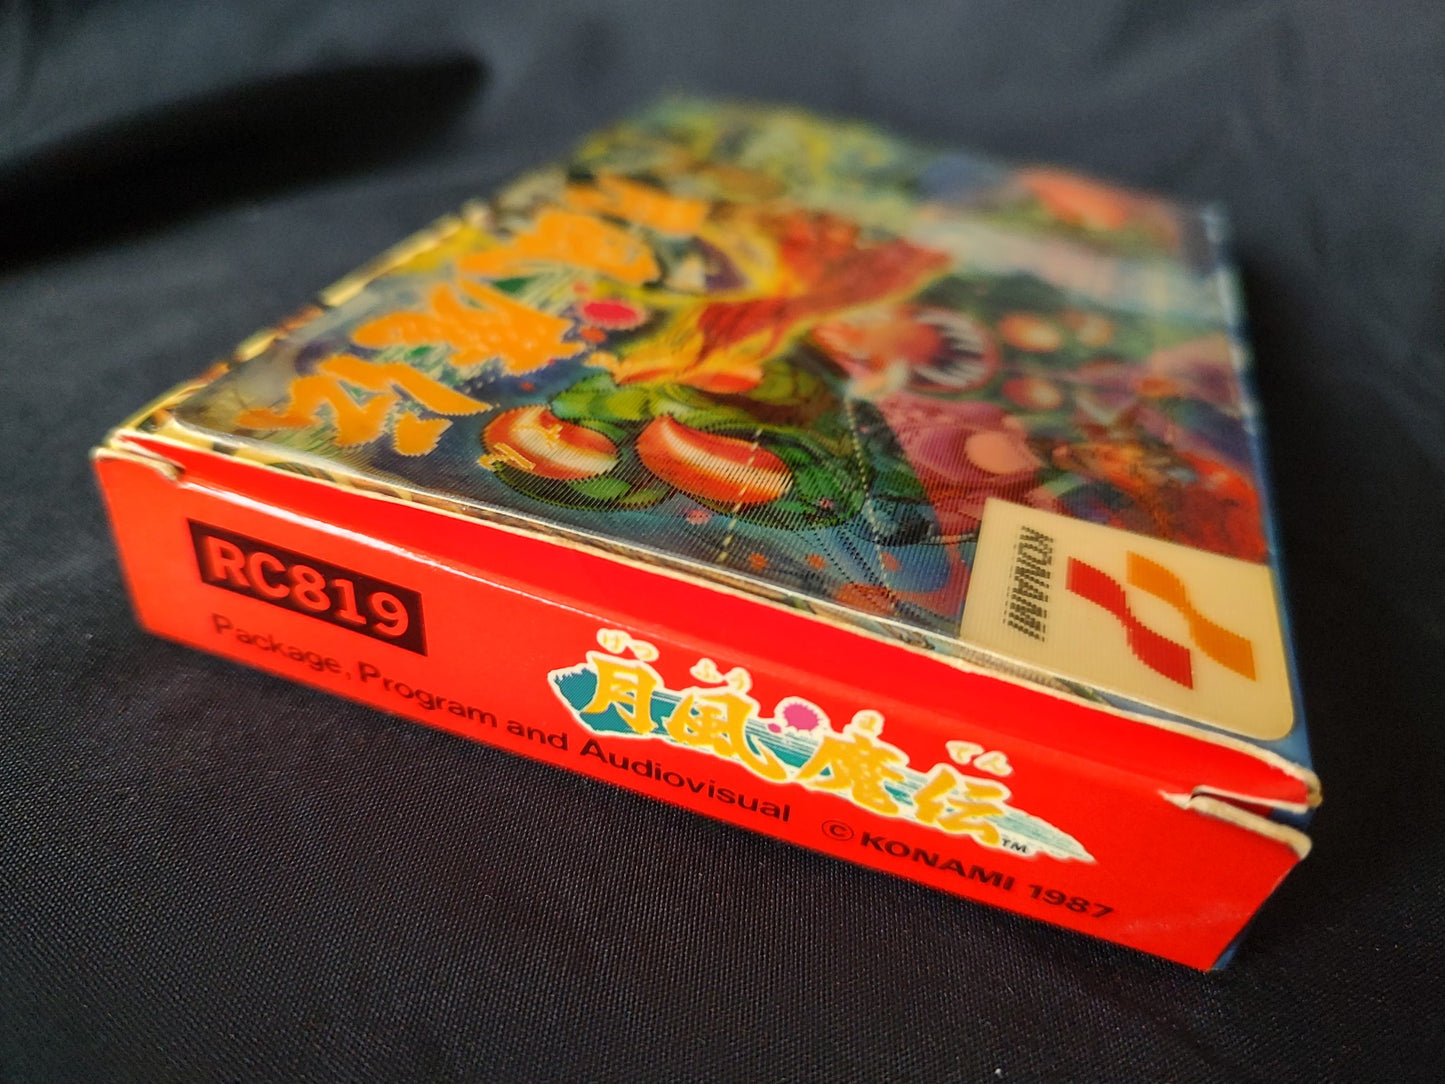 GETSU FUMA DEN MESAIA Nintendo Famicom NES Cartridge,Manual,Box set tested-g0403